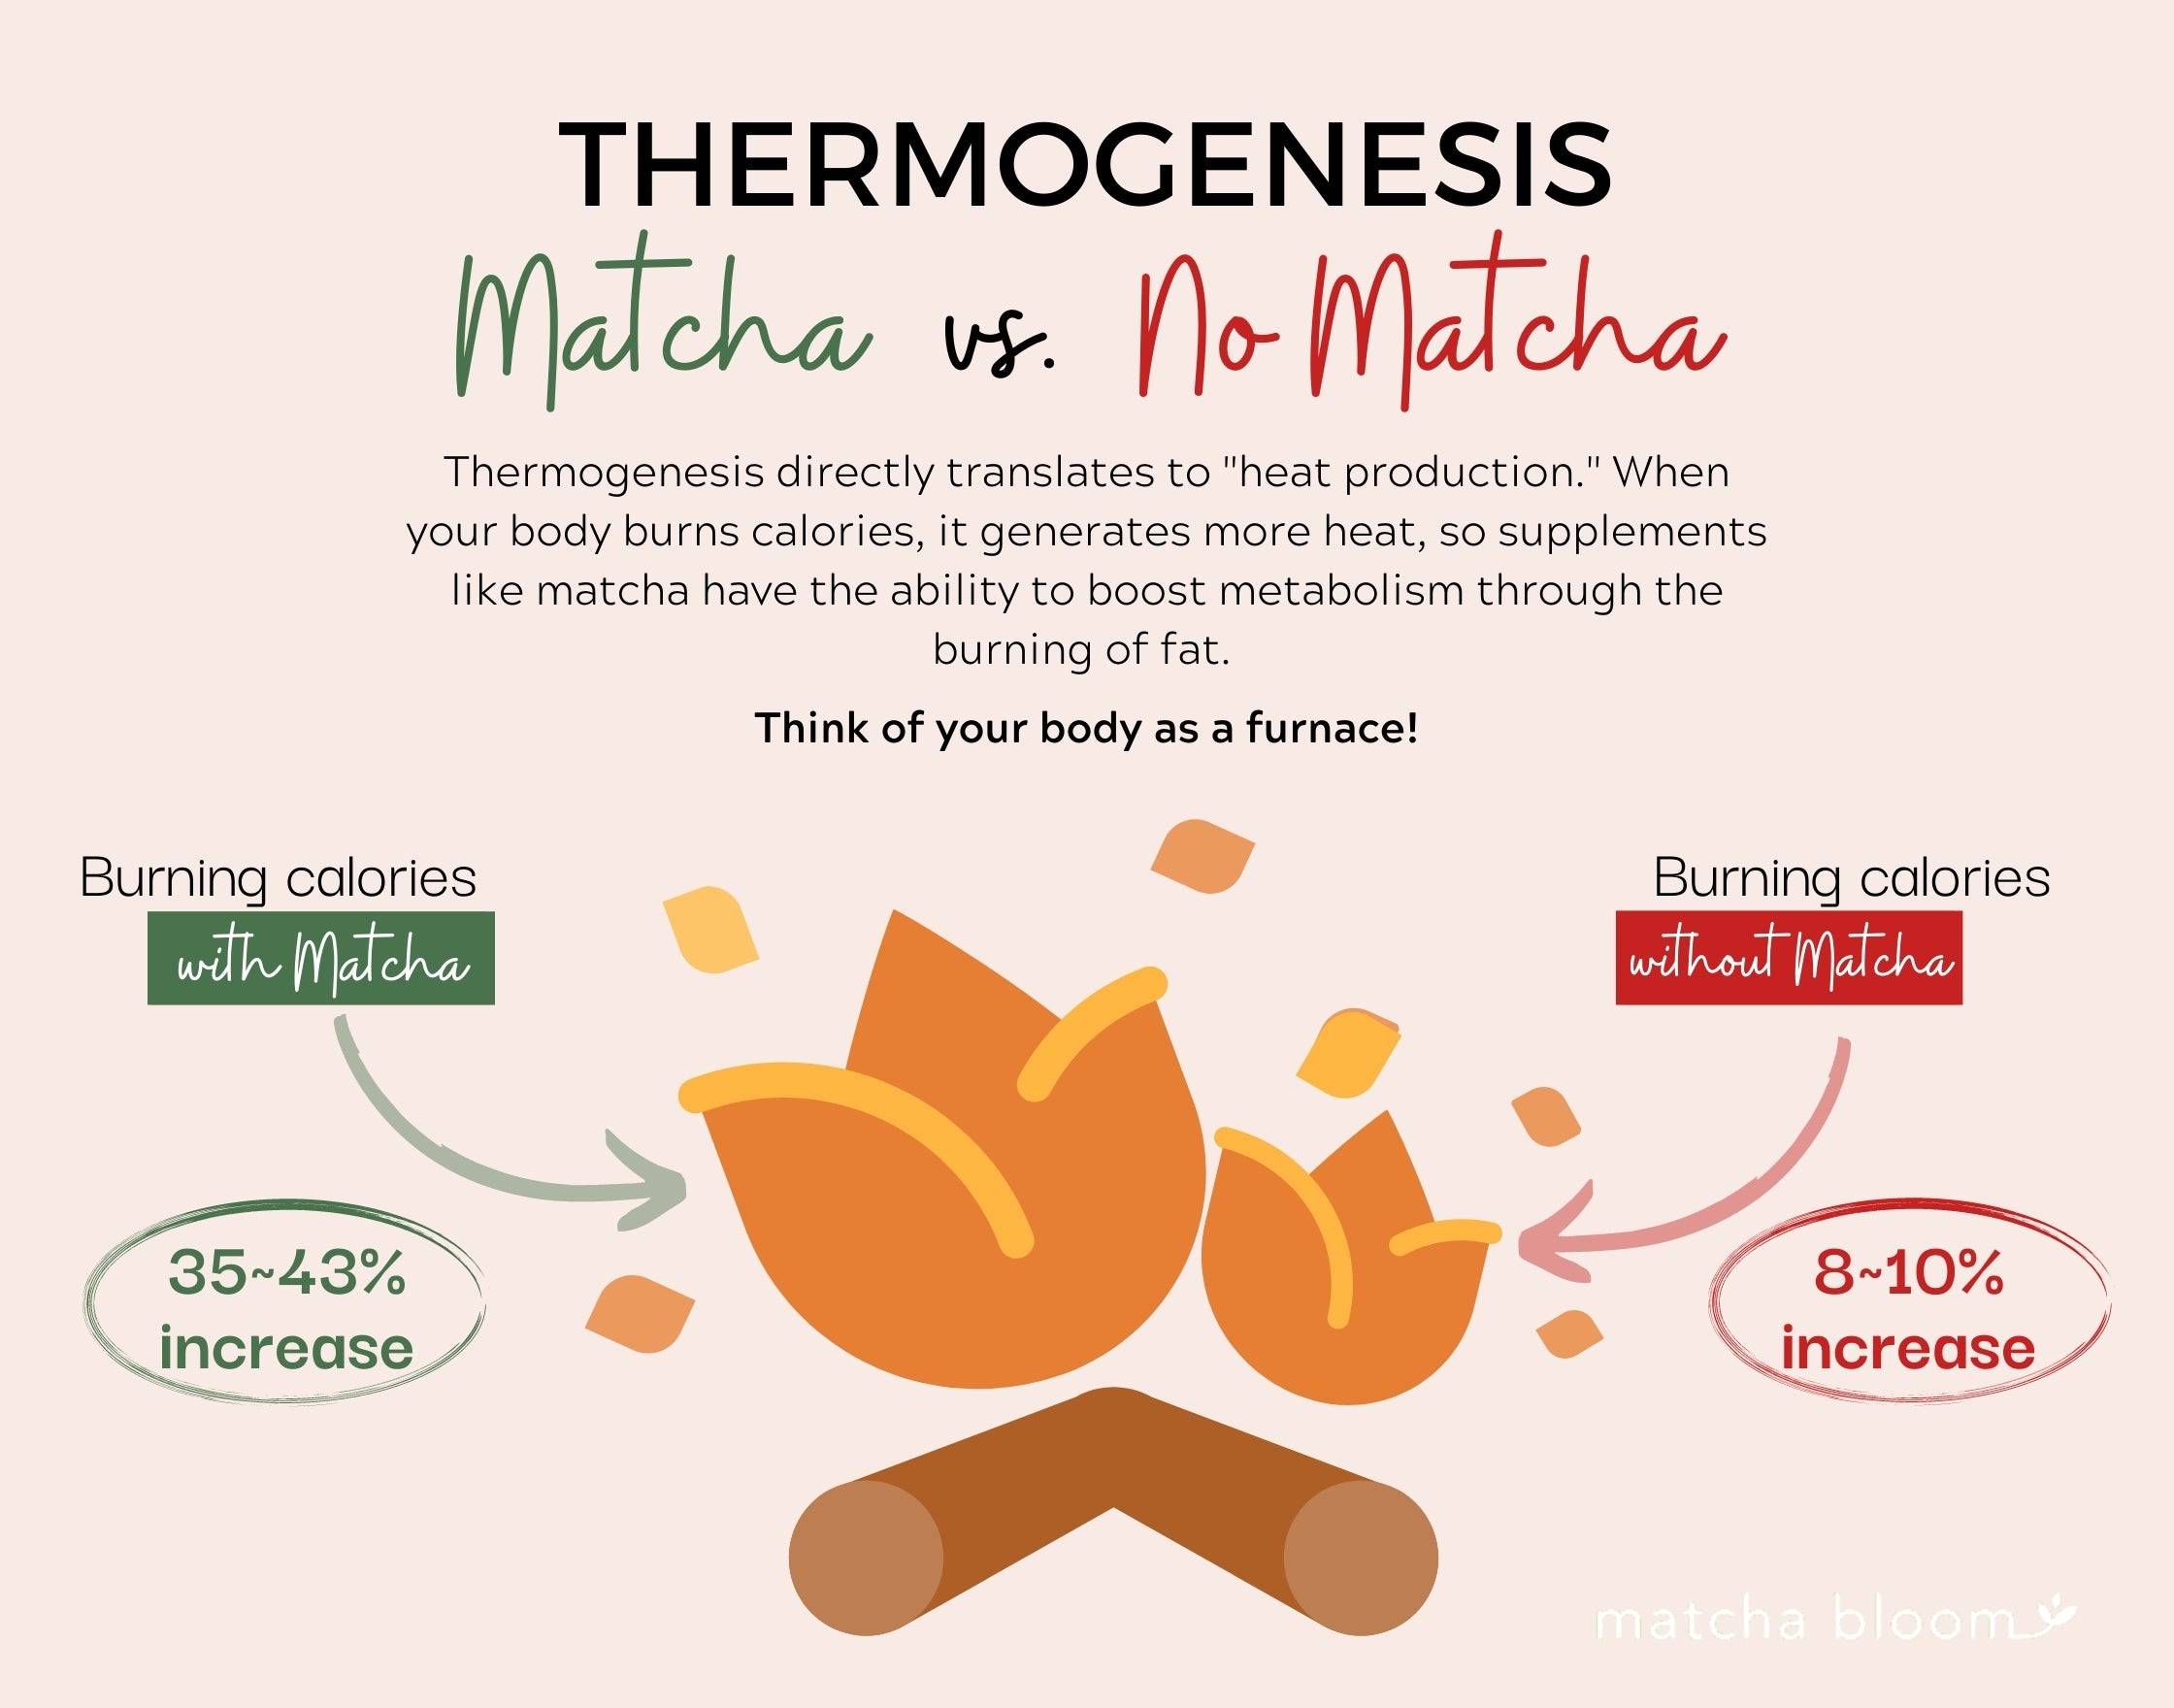 Matcha increases metabolism through thermogenesis